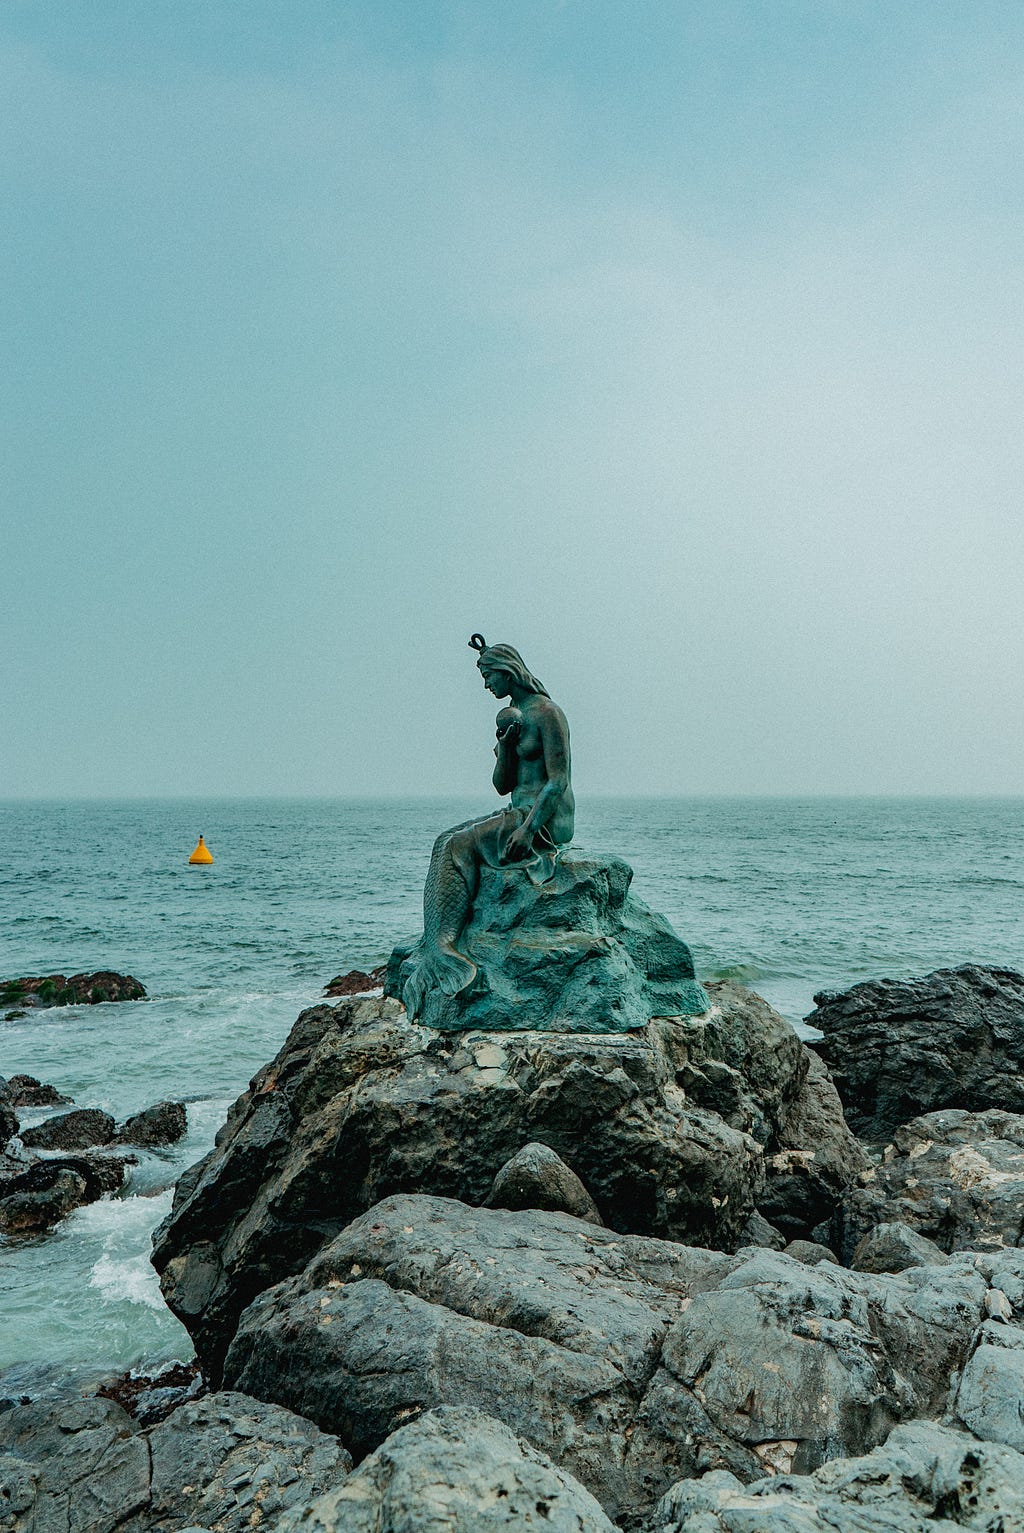 The Little Mermaid is a statue in Denmark